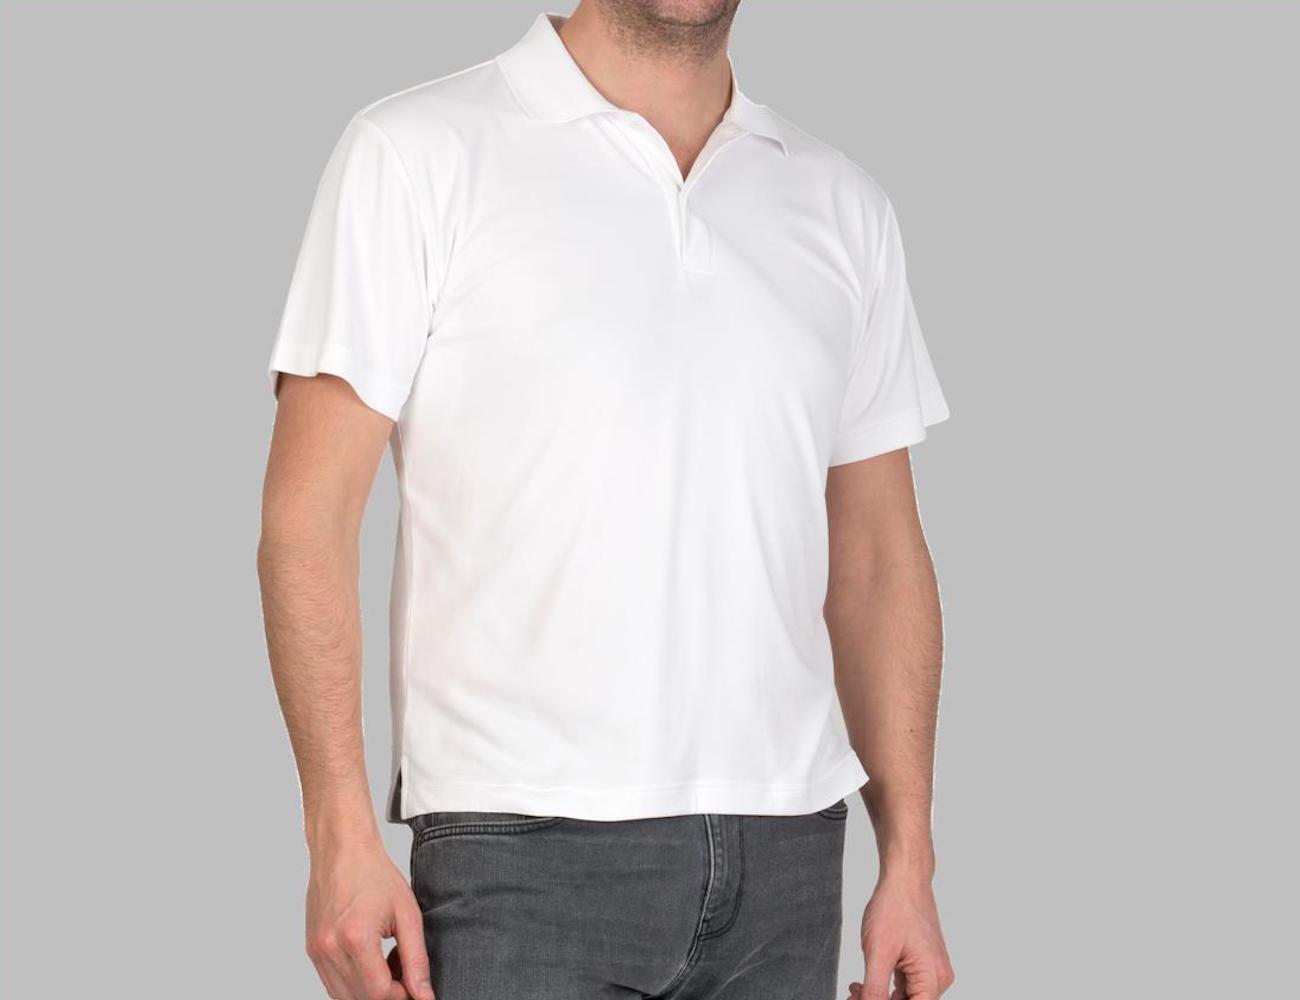 NanoDri Sweatproof Polo Shirts » Gadget Flow